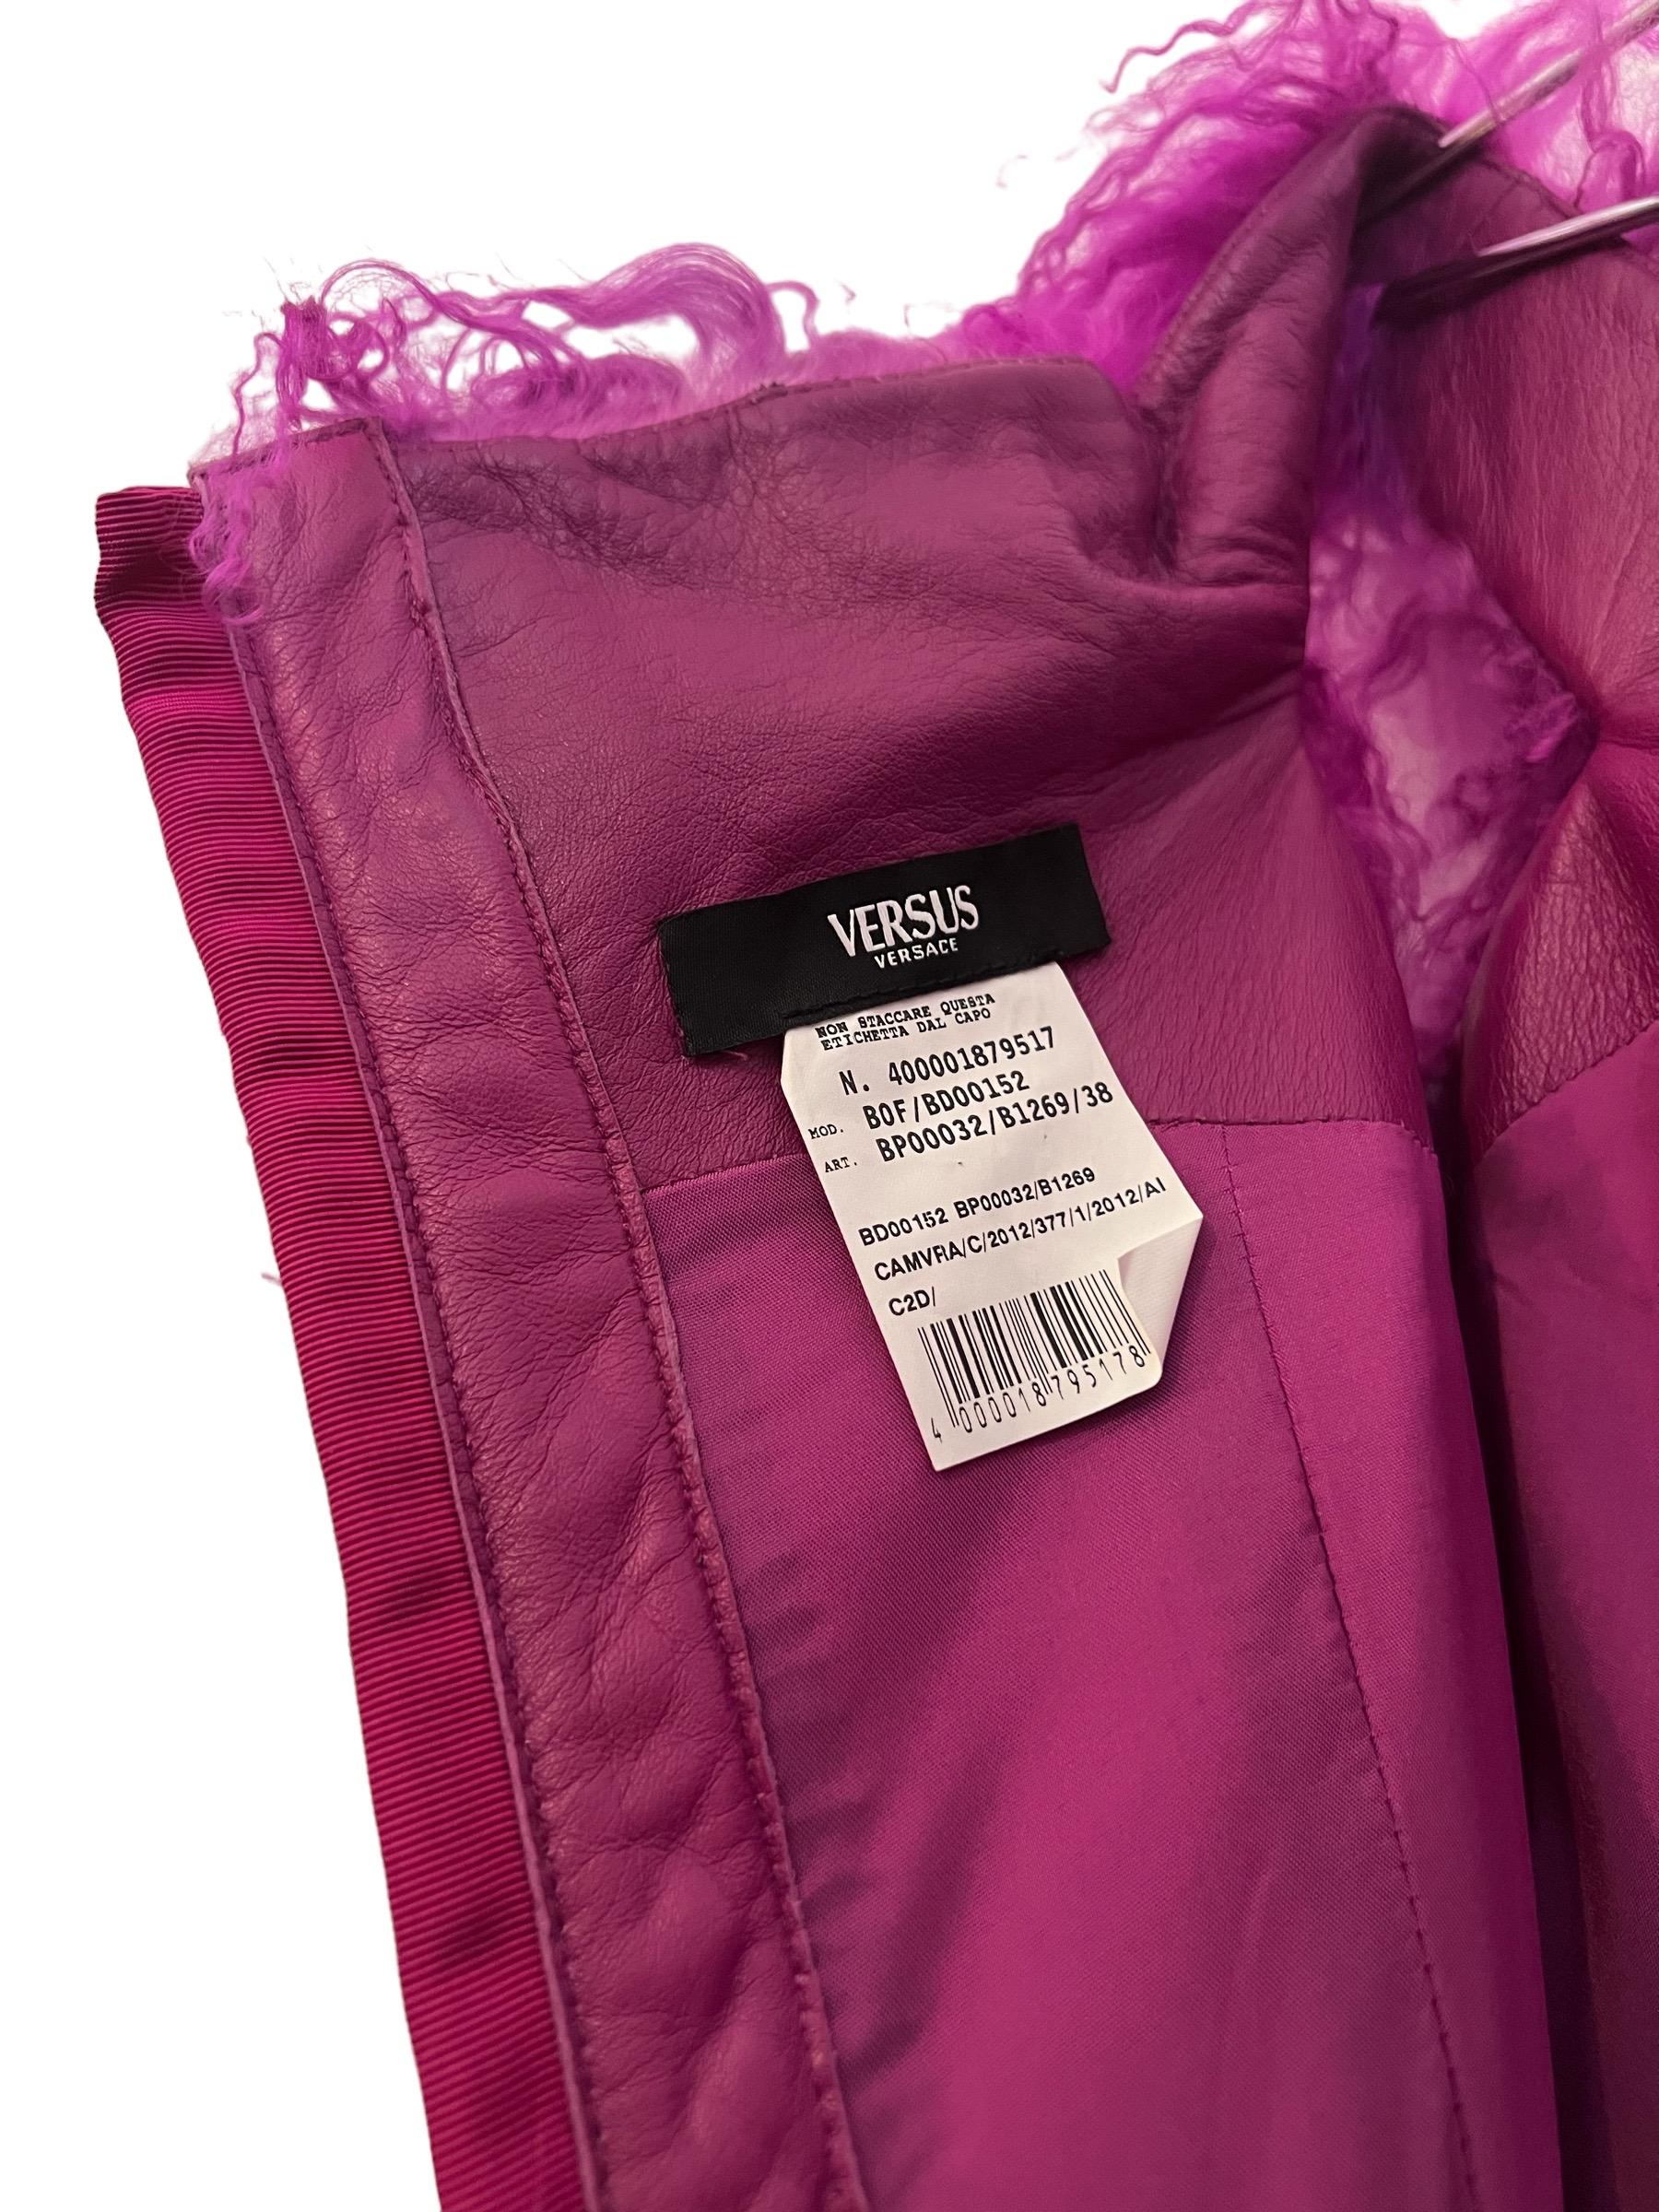 Outrageous VERSUS Versace 2012 Runway Magenta Purple Mongolian Lamb Fur Dress For Sale 3